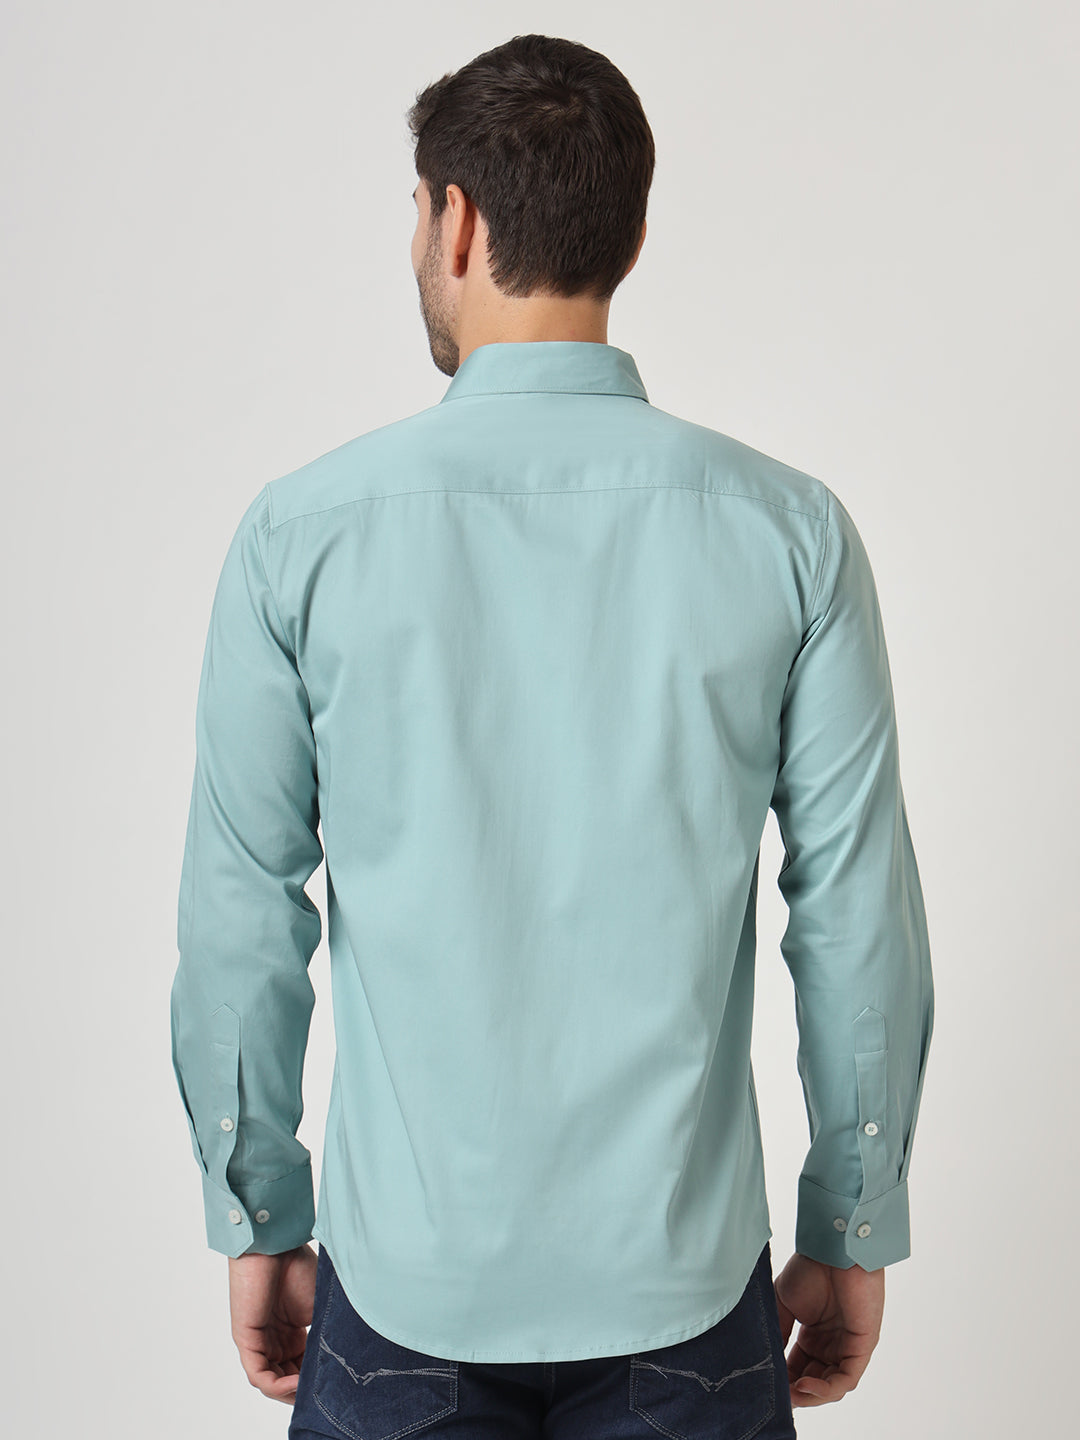 Premium Cotton Lycra Satin Greyish Green Shirt